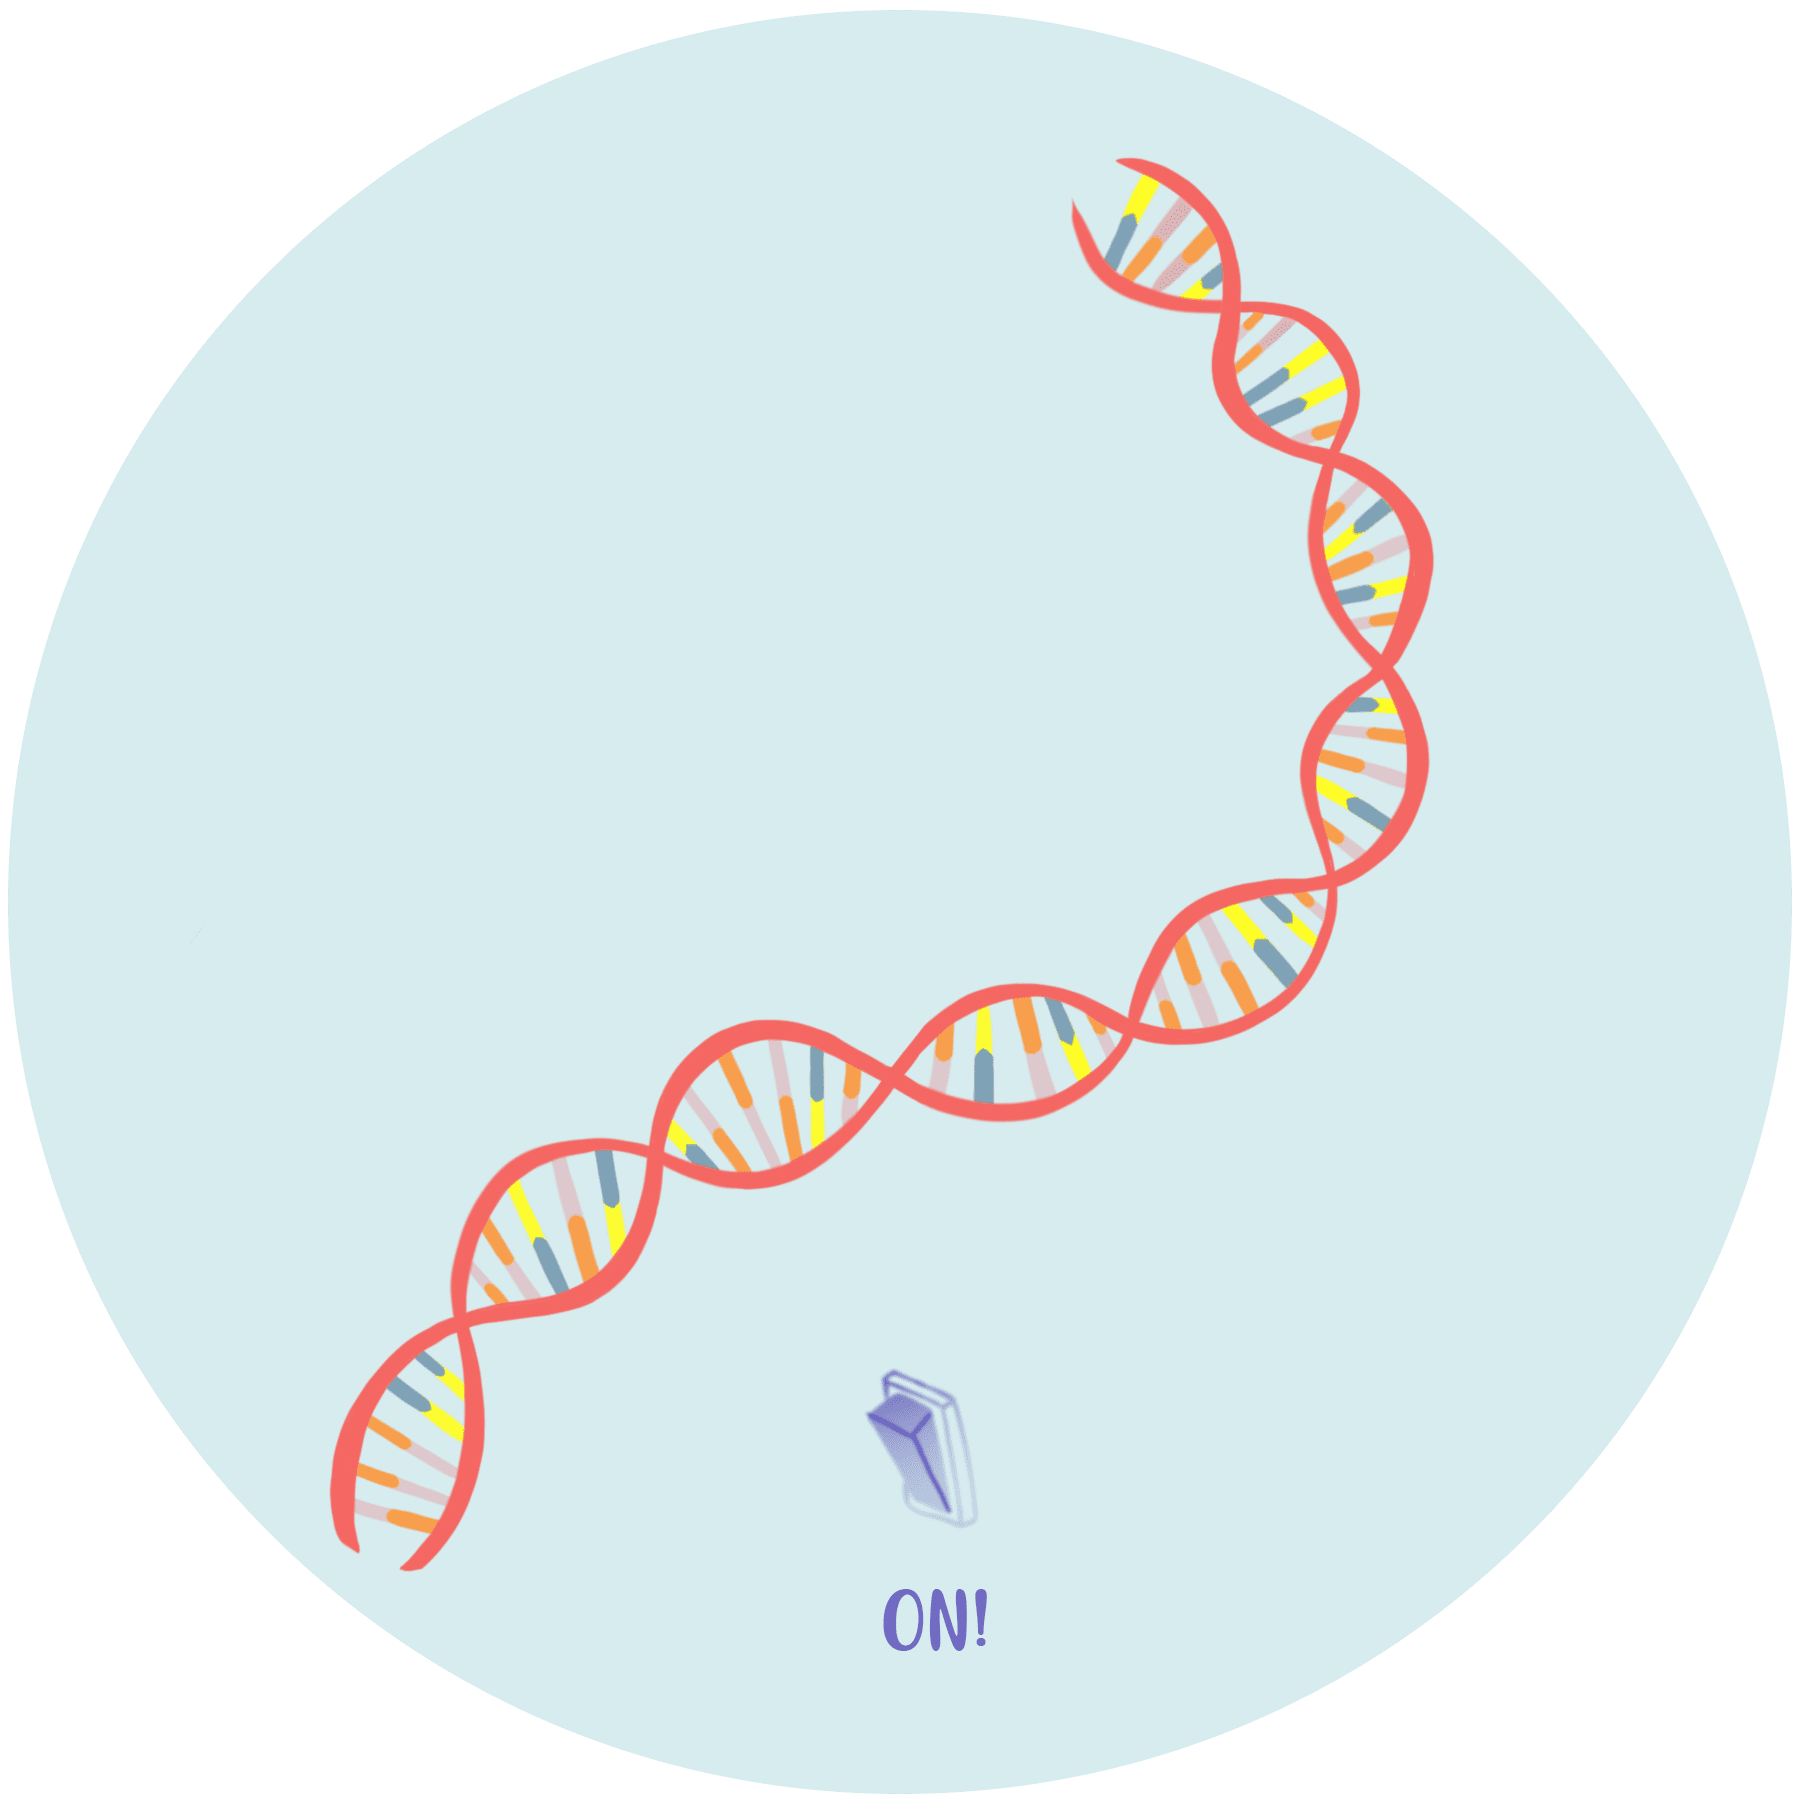 DNA 的插图，带有一个写着“ON！”的电灯开关